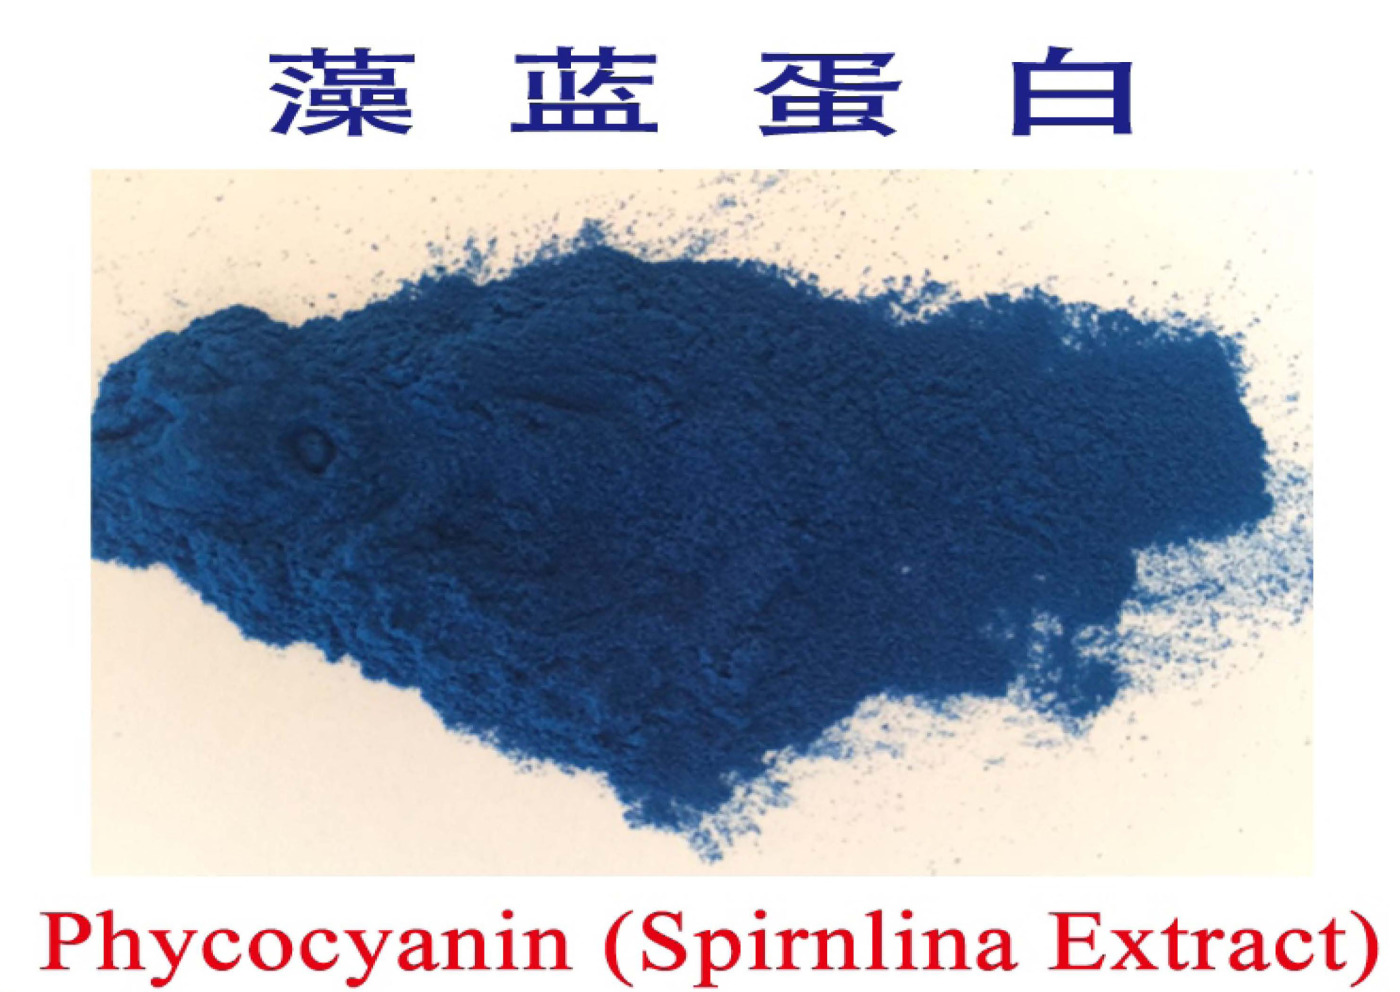 Phycocyanin (Spirulina Extract)